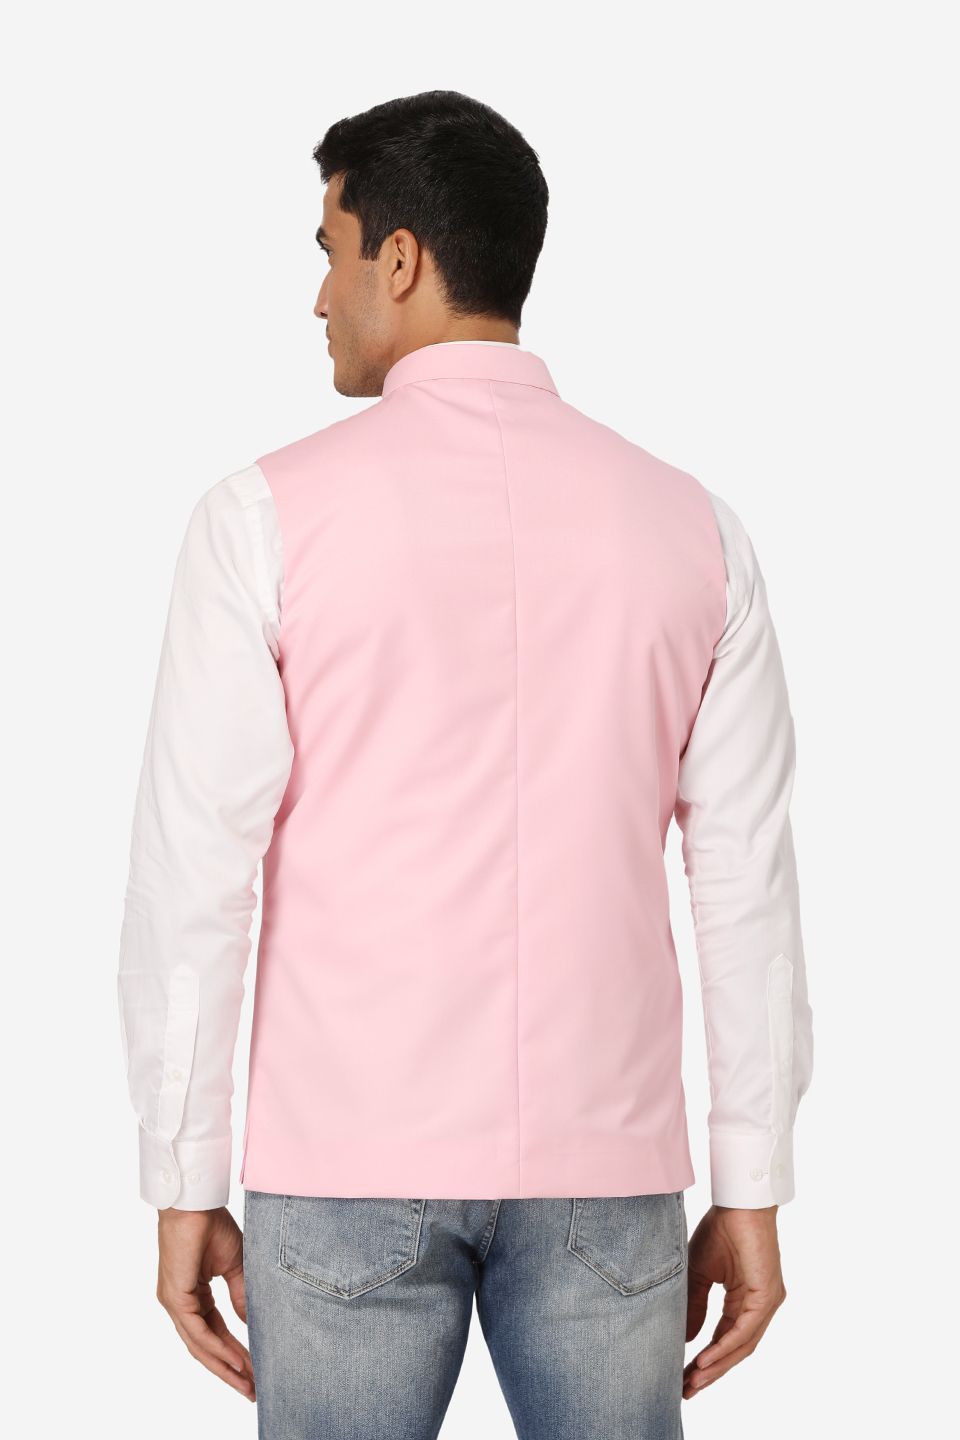 WINTAGE Men's Poly Cotton Festive and Casual Nehru Jacket Vest Waistcoat : Light Pink